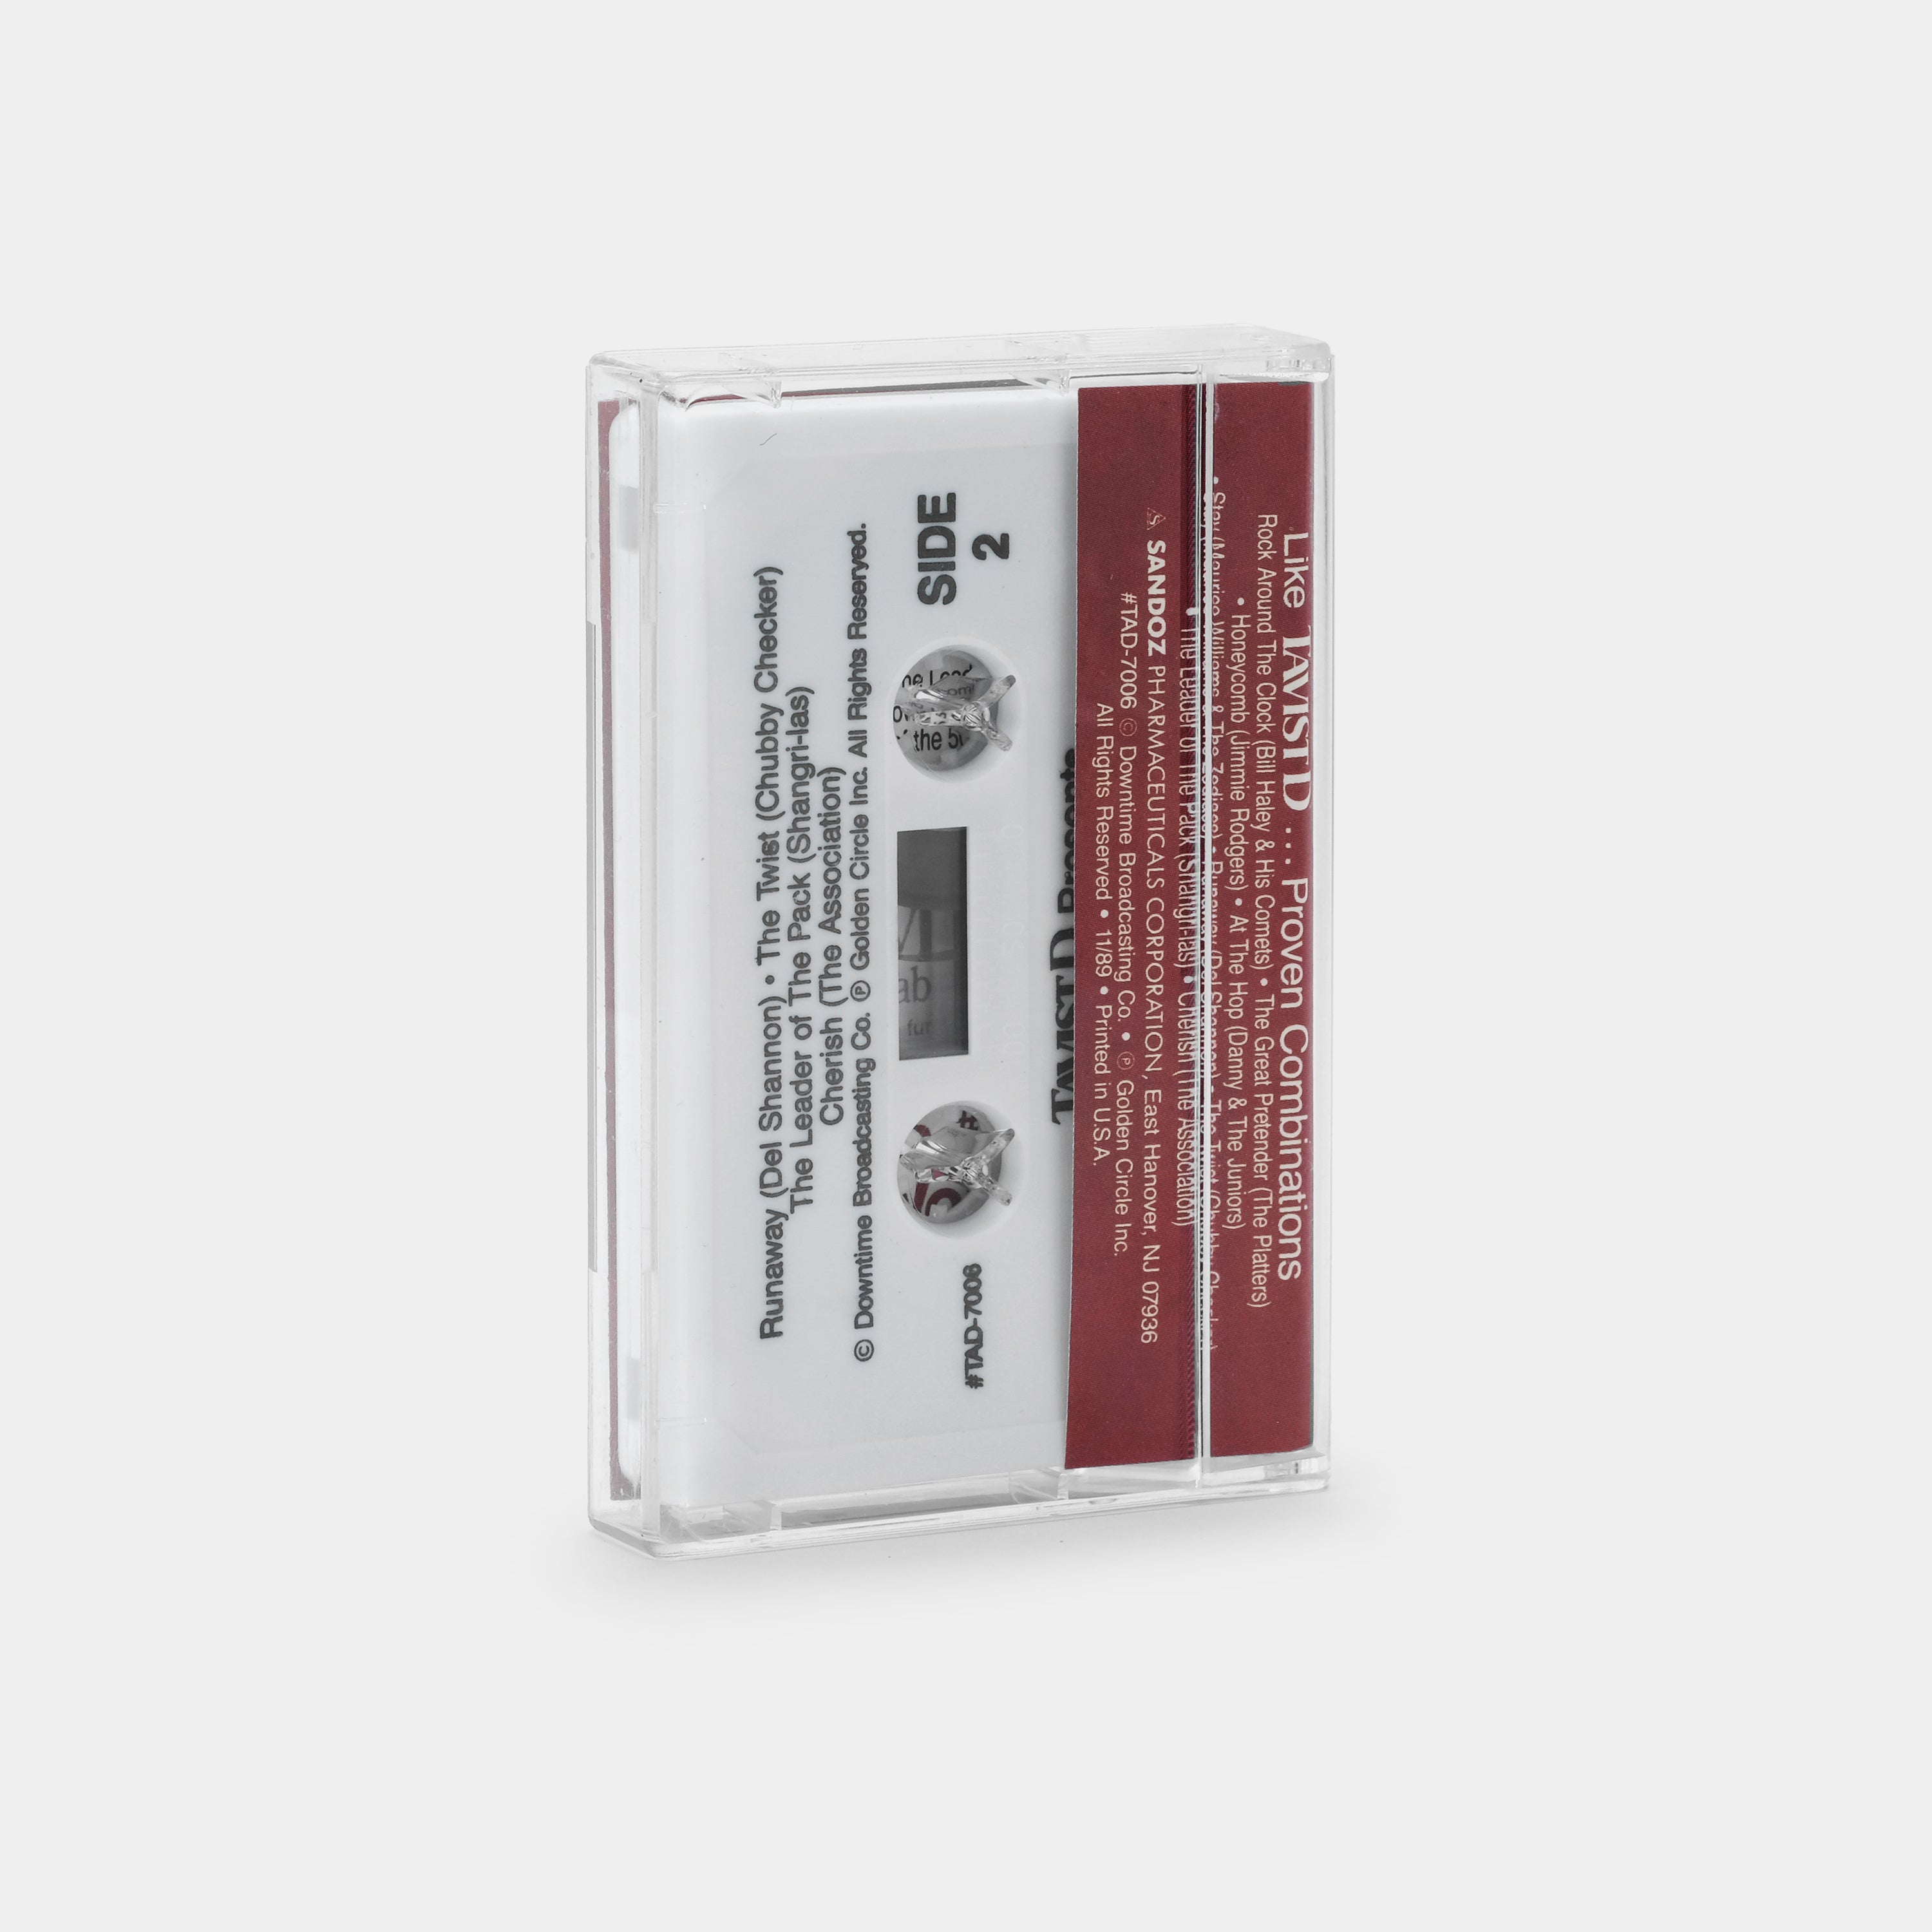 TavistD Presents Proven Combinations: Volume 1 Cassette Tape